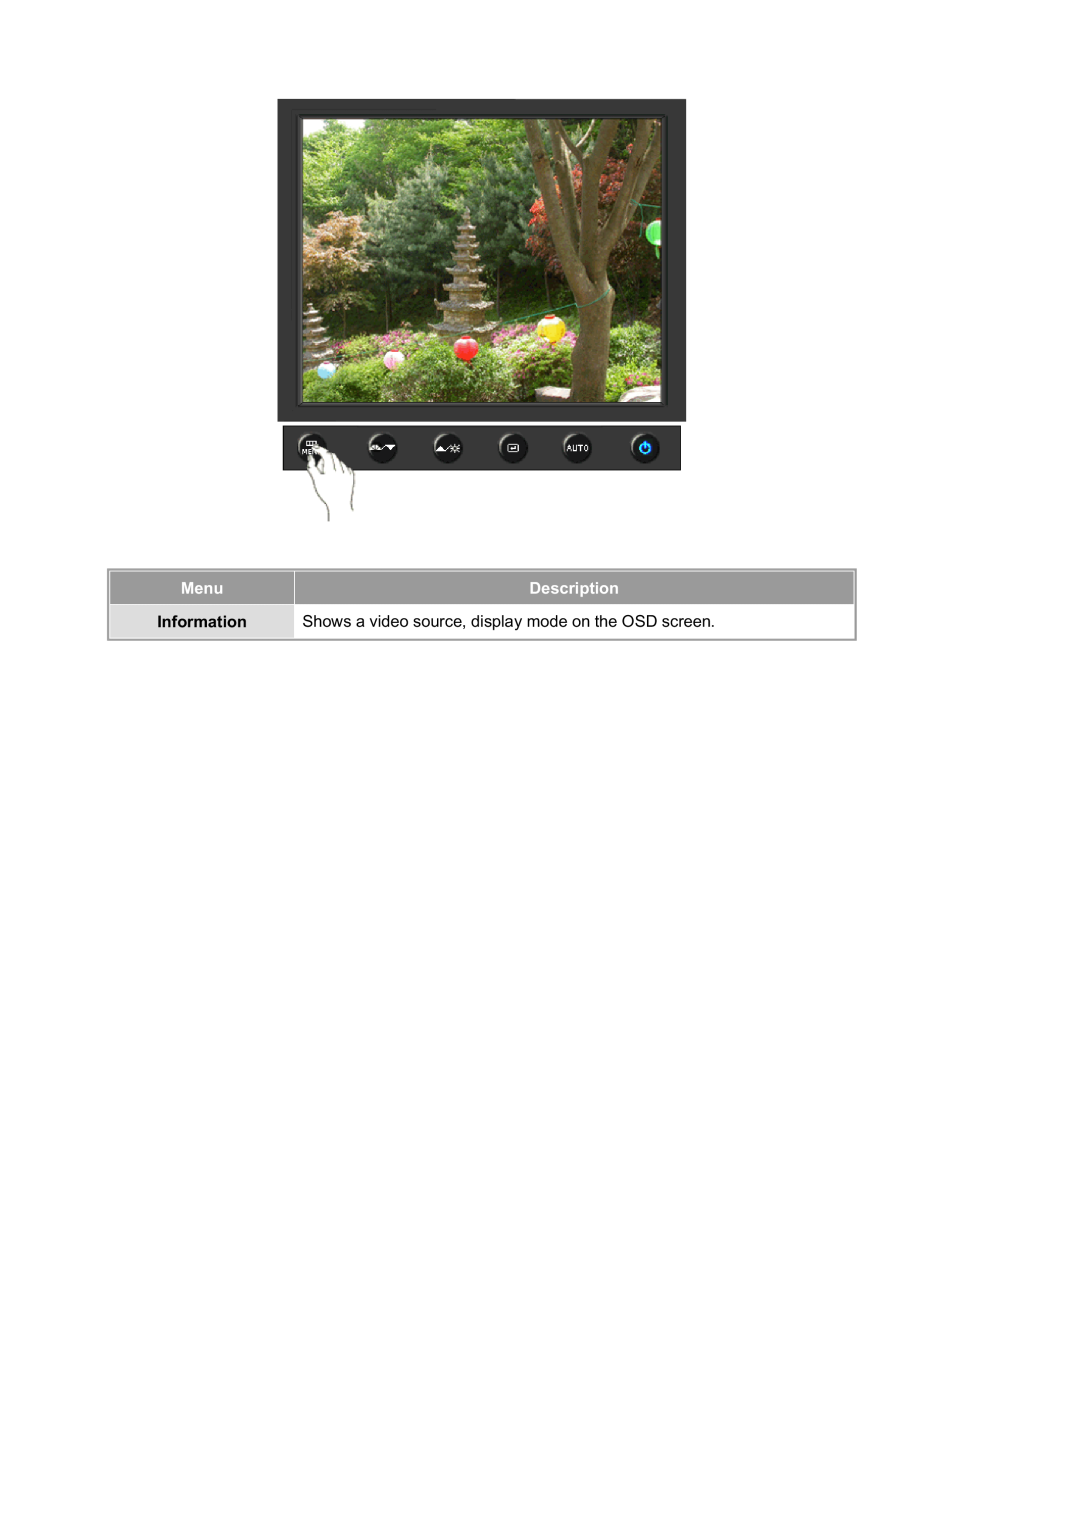 Samsung 940FN, 940T, 940B, 940N, 740B Menu, Description, Information Shows a video source, display mode on the OSD screen 